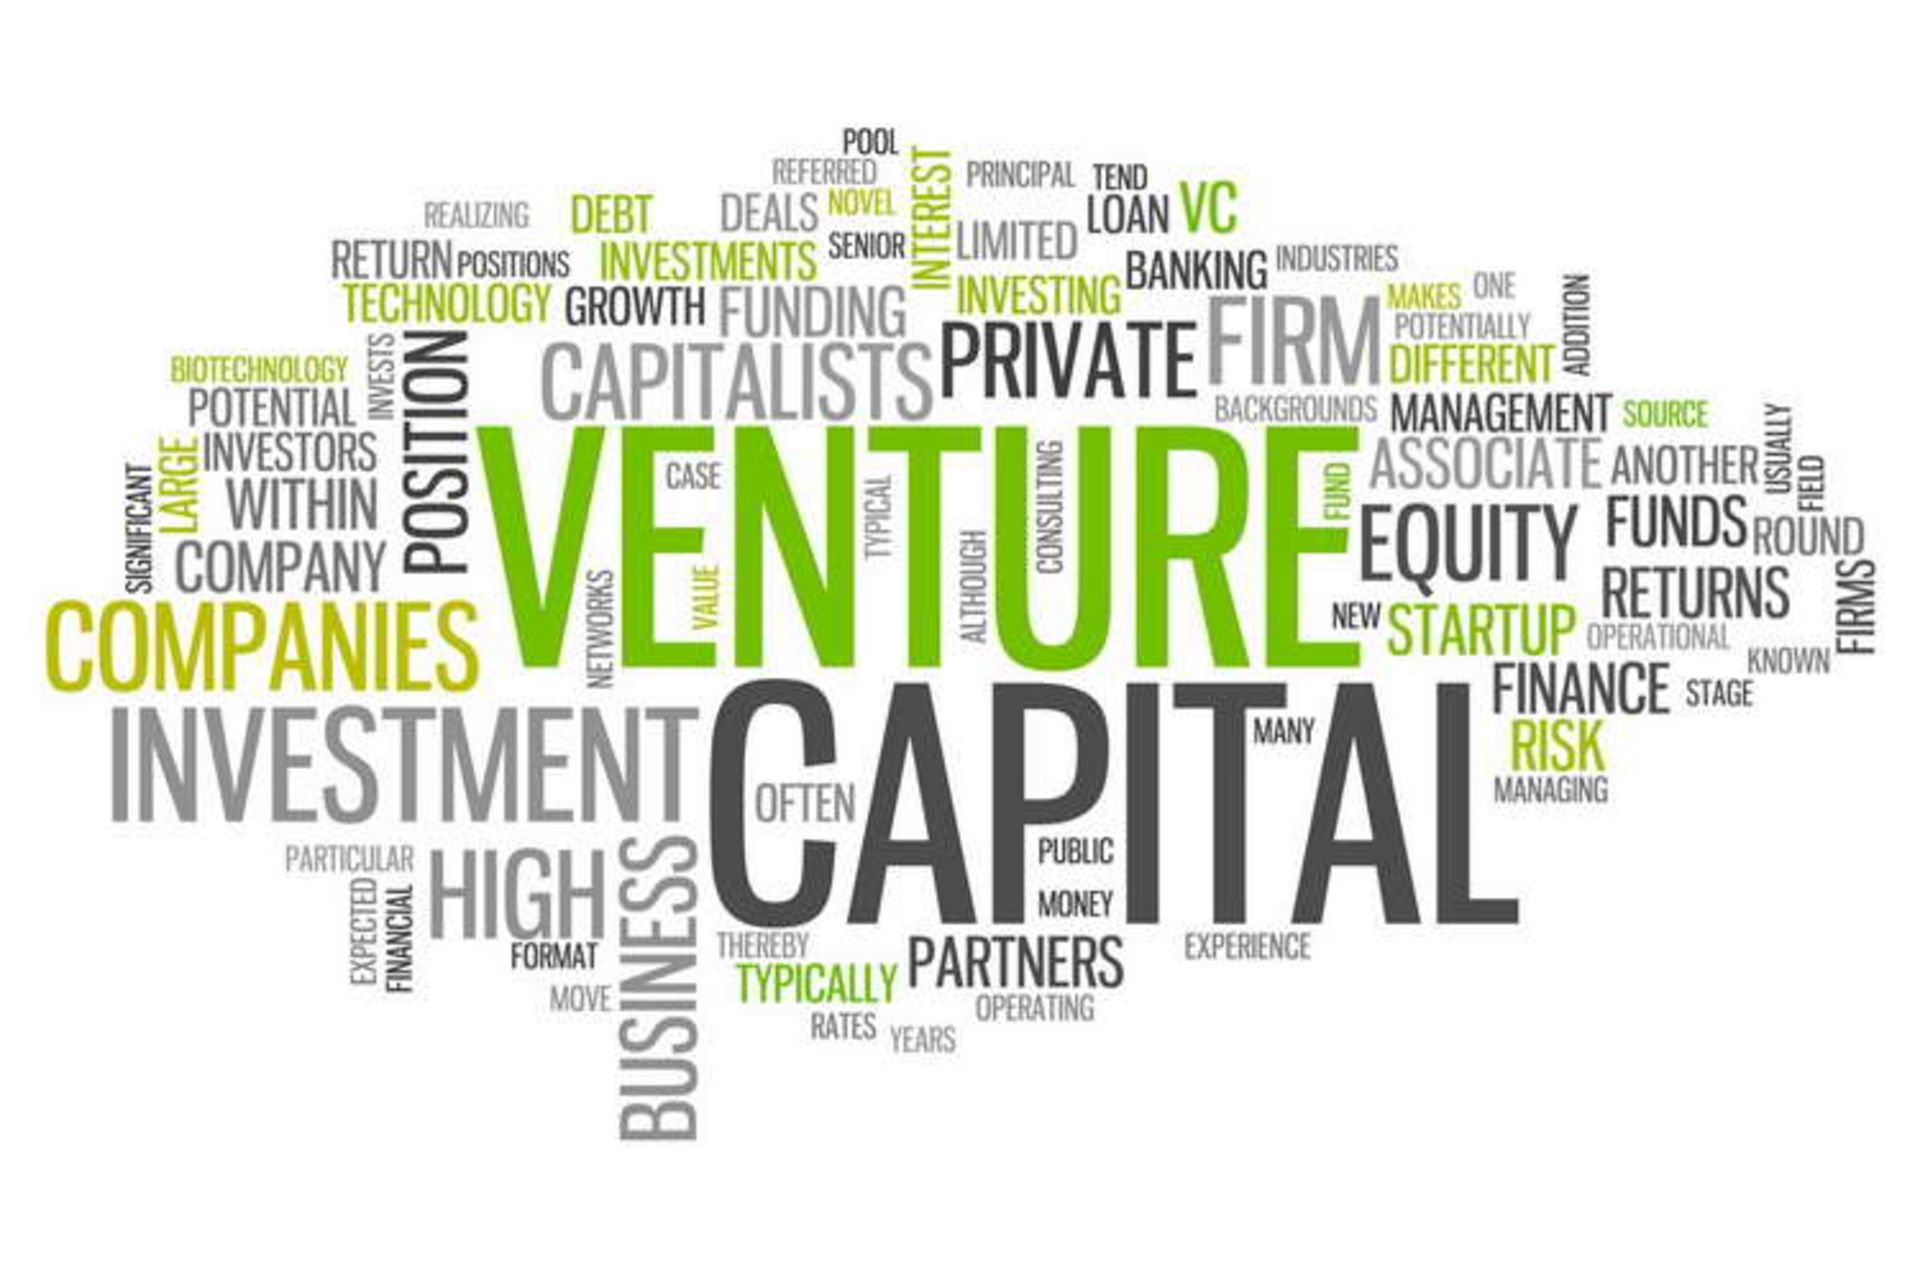 Venture Capital Method